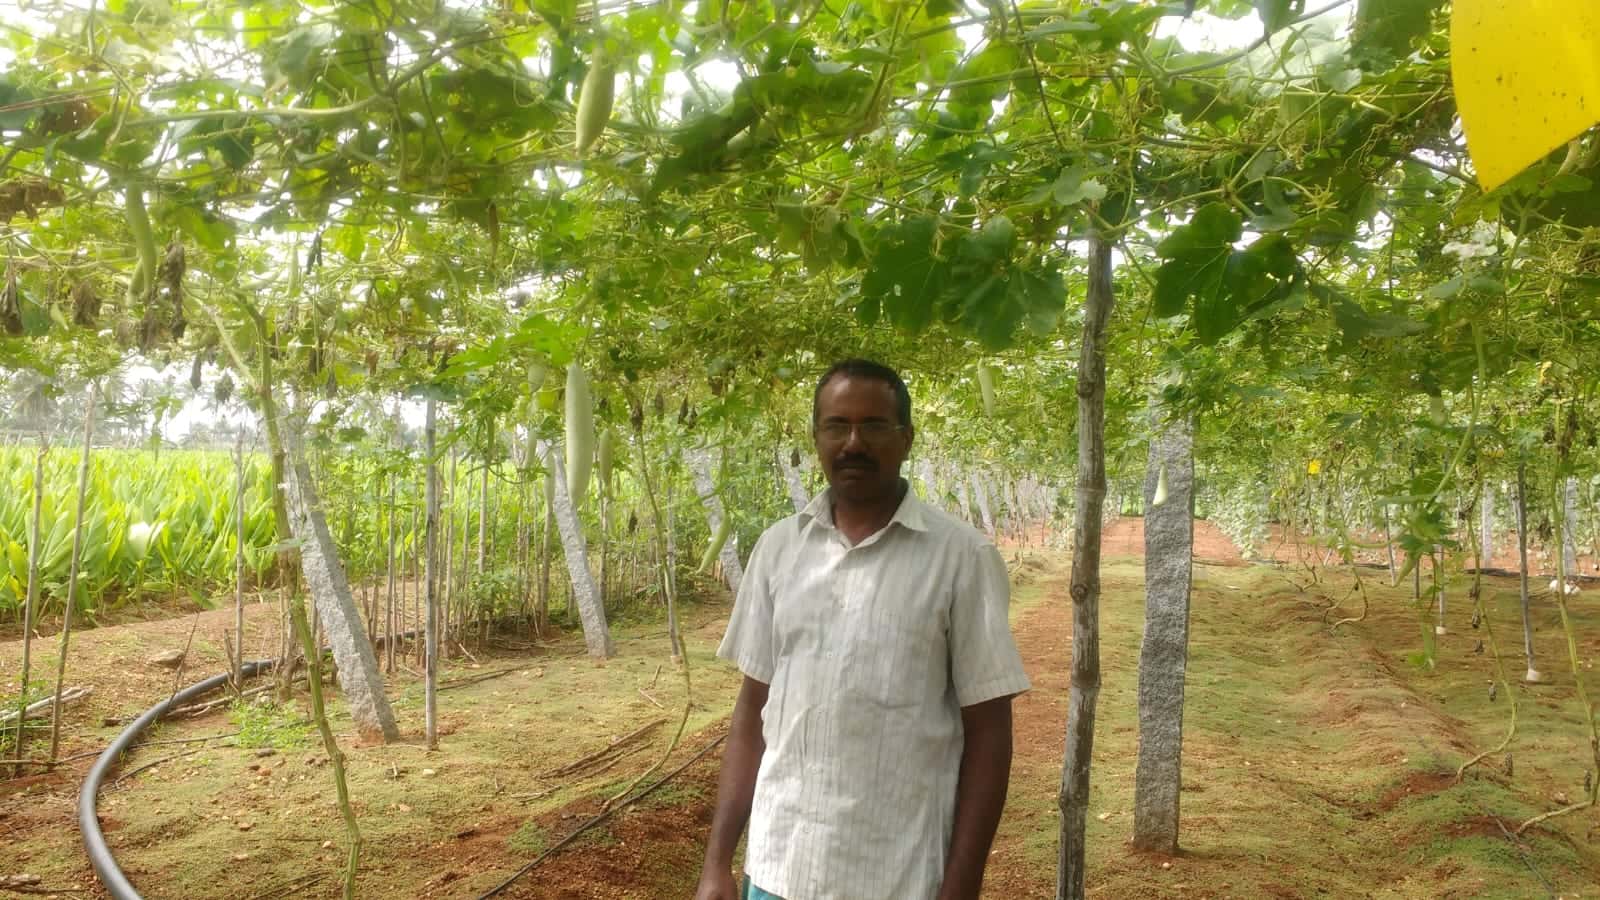 Saravanan has been practicing organic farming since 2008